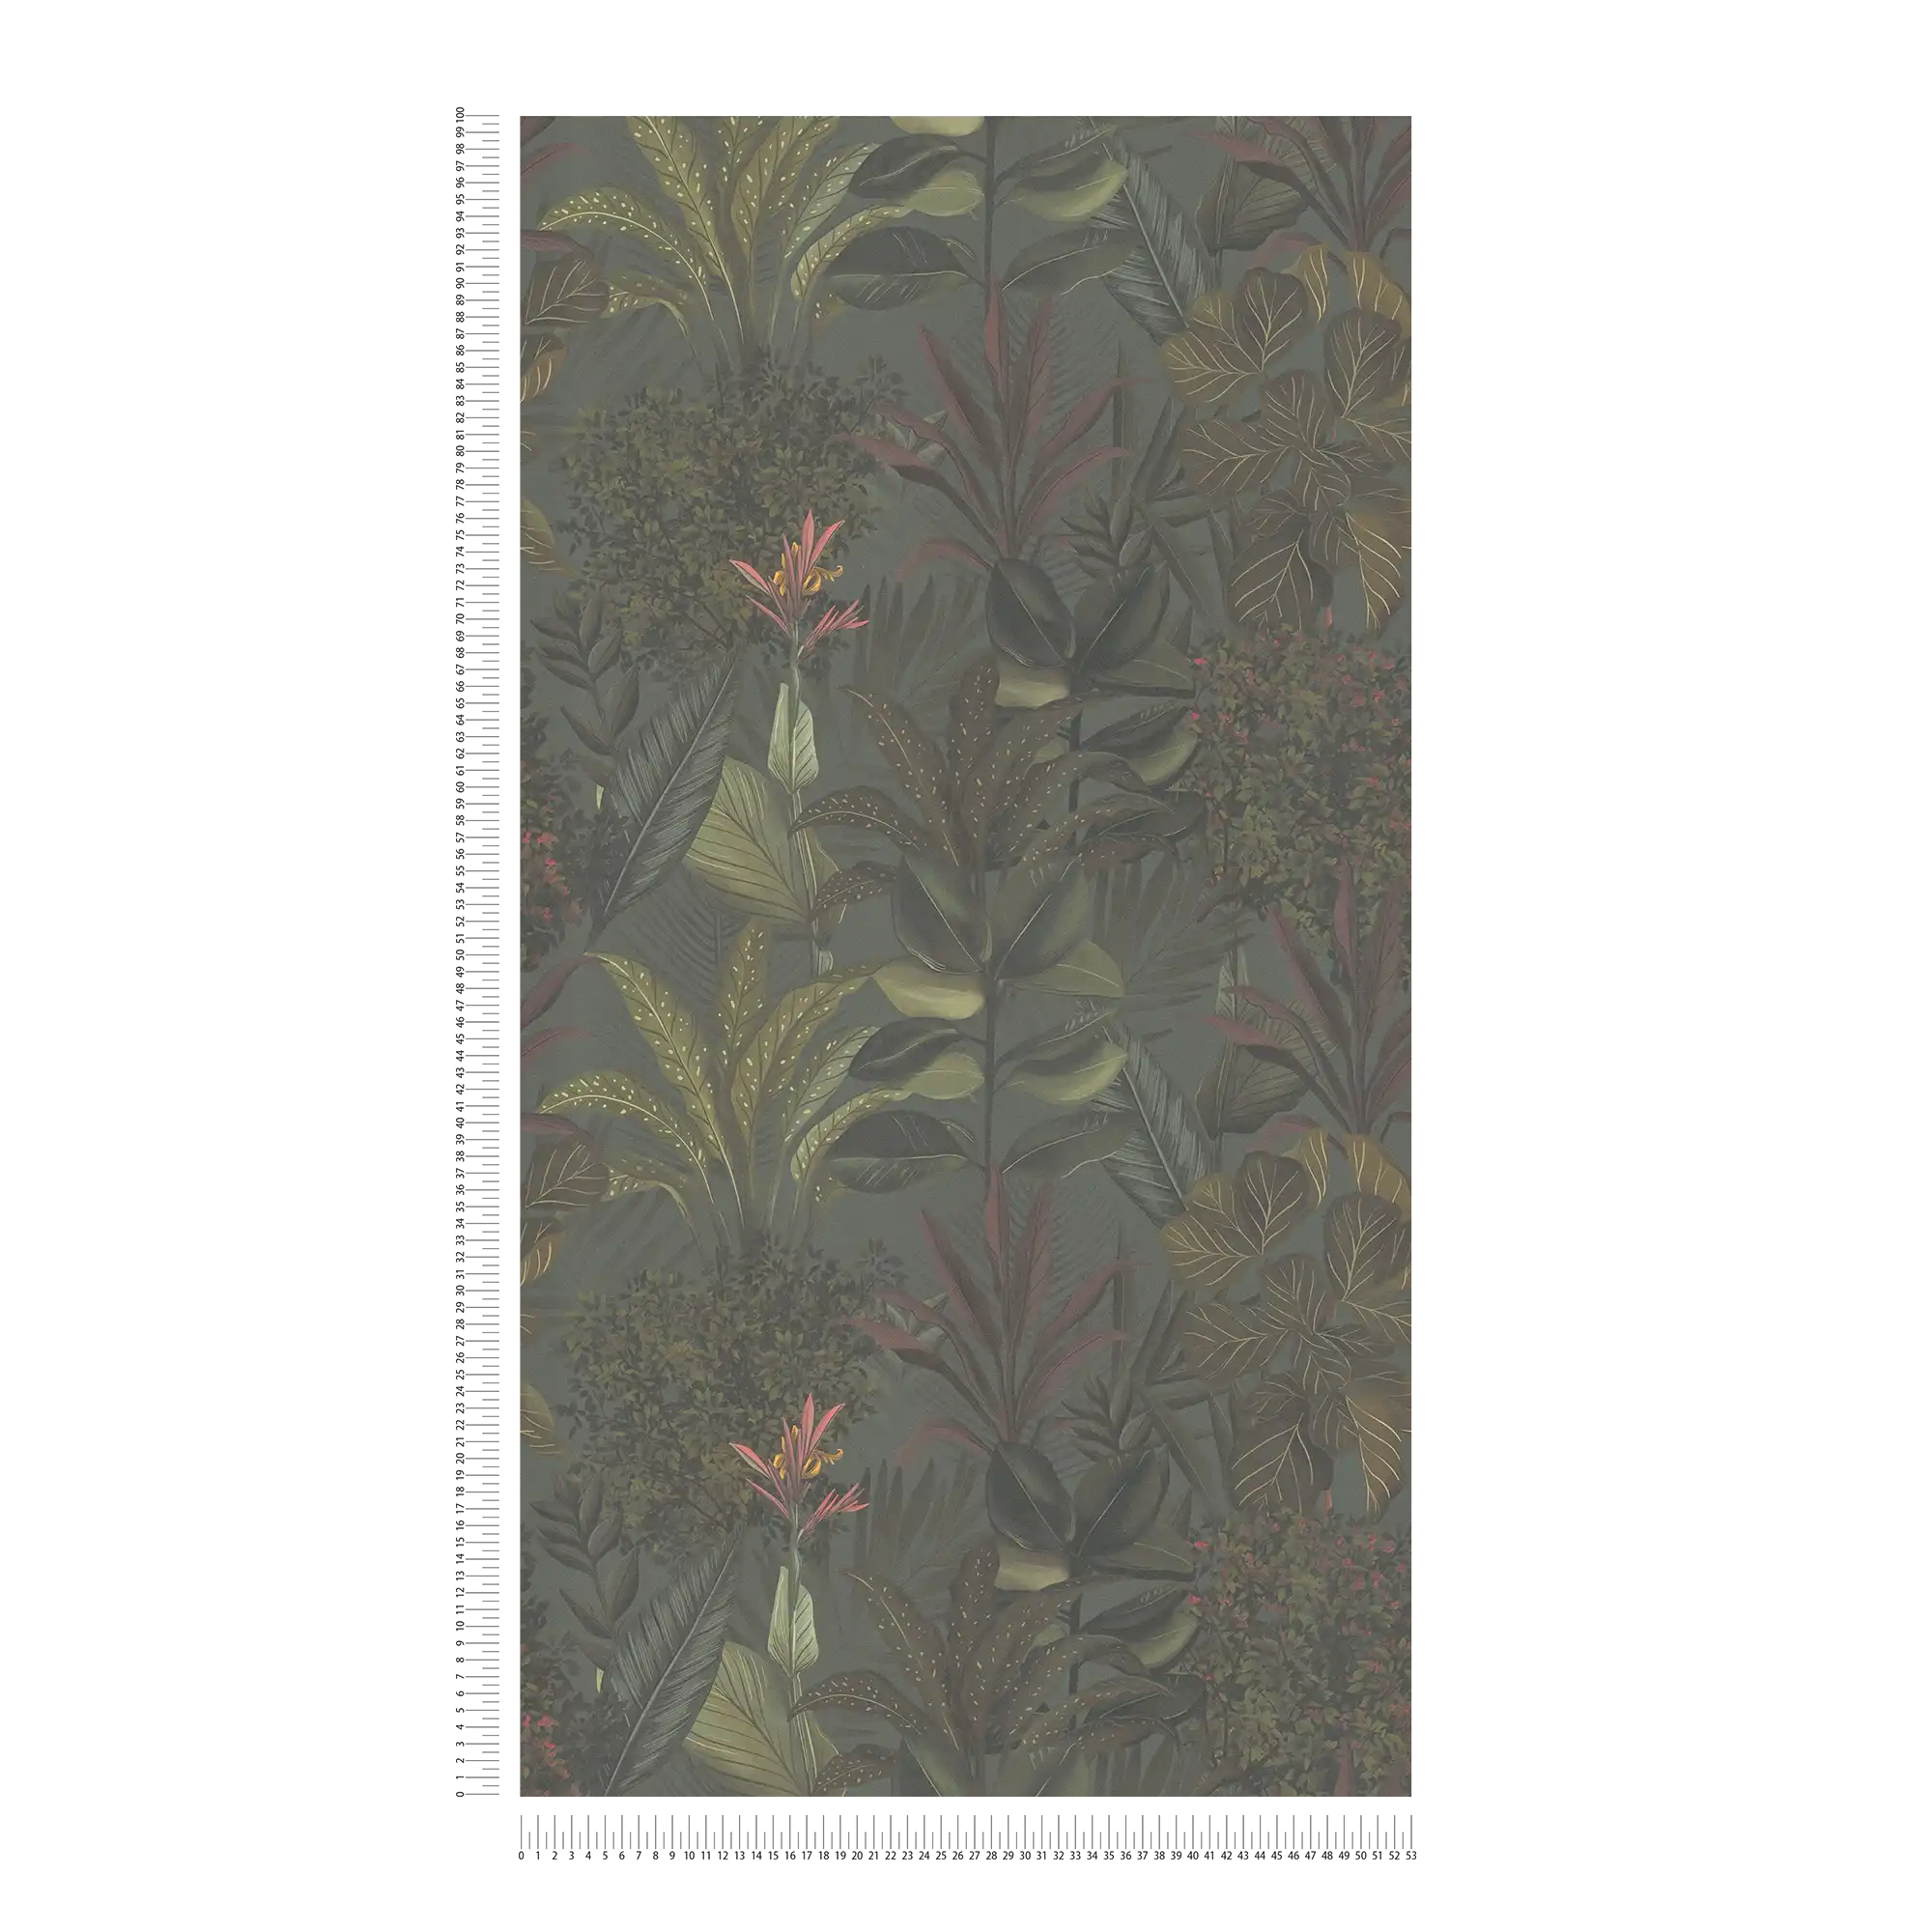             Florale Tapete modern mit Blättern & Gräsern strukturiert matt – Dunkelgrün, Bordeaux
        